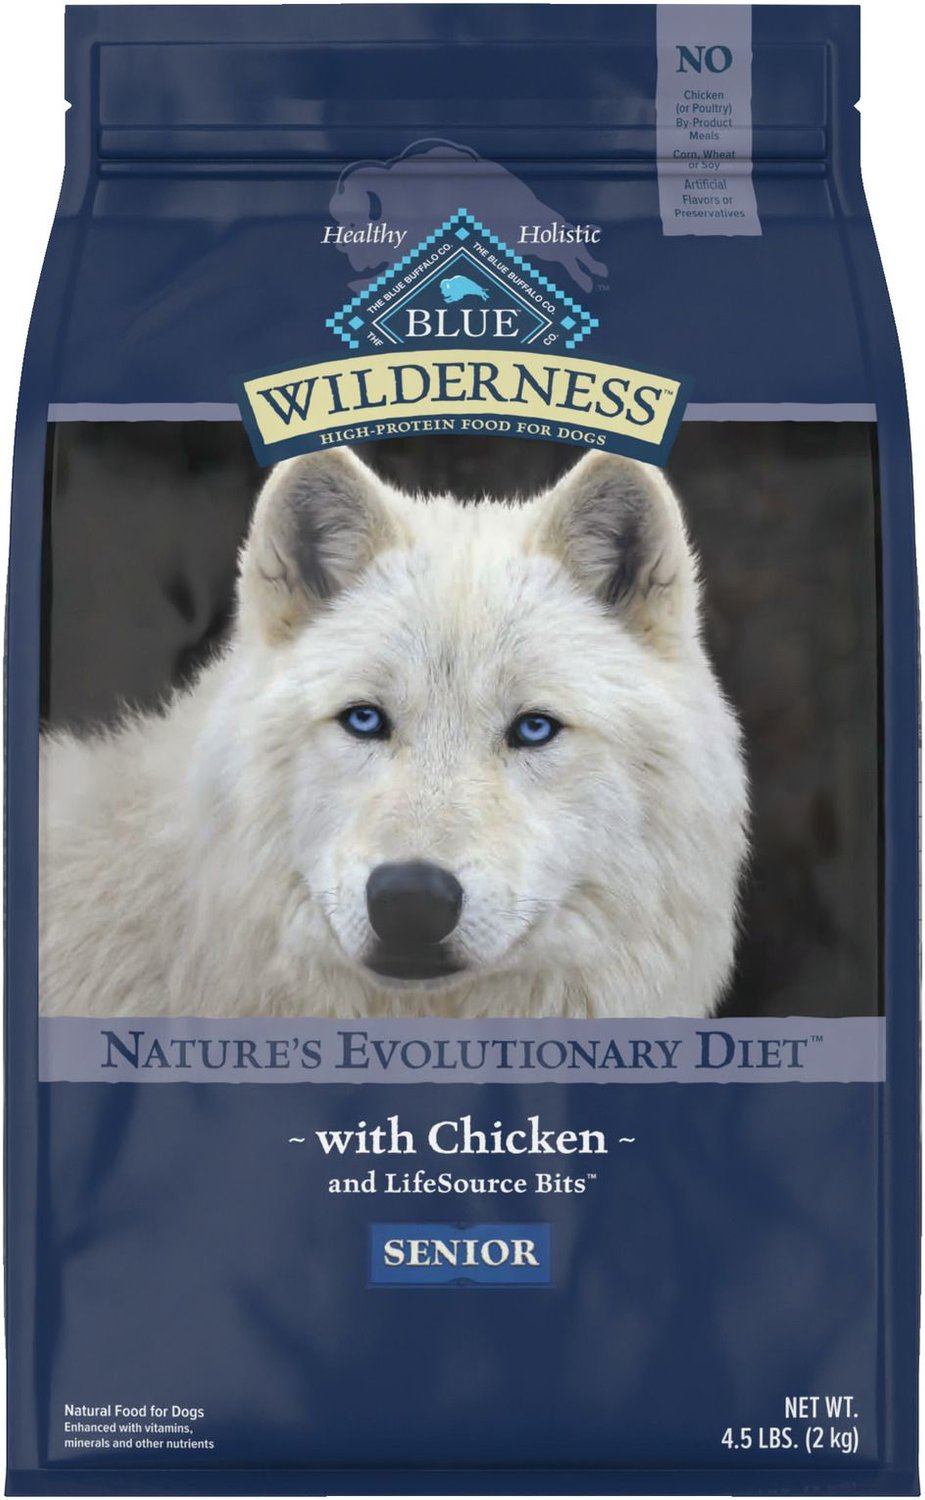 Blue Buffalo Wilderness Senior Chicken Recipe Grain-Free Dry Dog Food